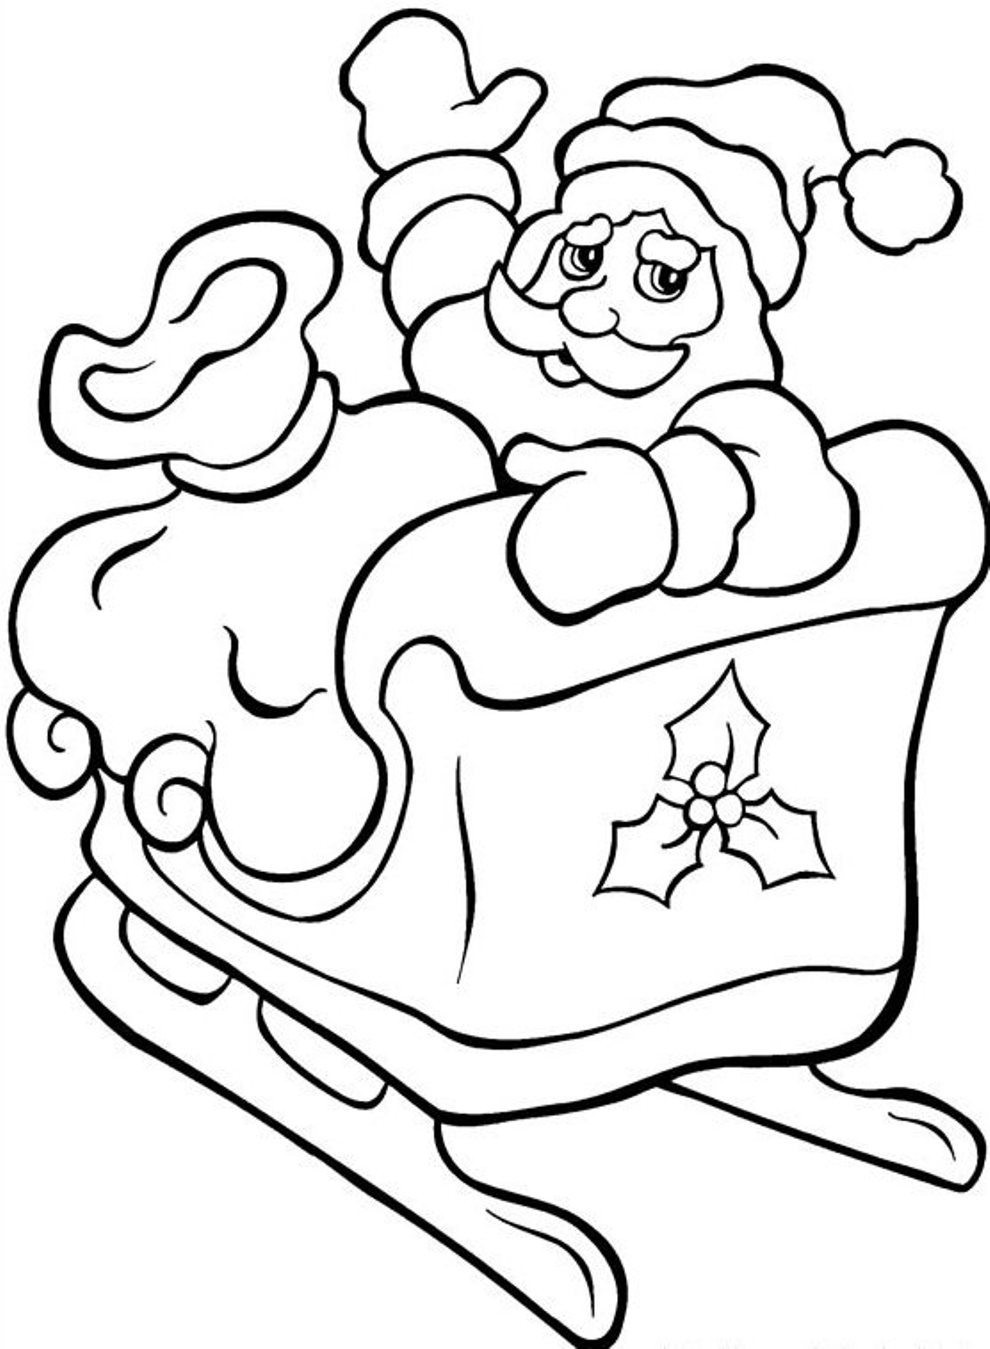 Santa Sleigh Coloring Pages Printable
 Printable Coloring Pages Christmas Santa With His Sleigh